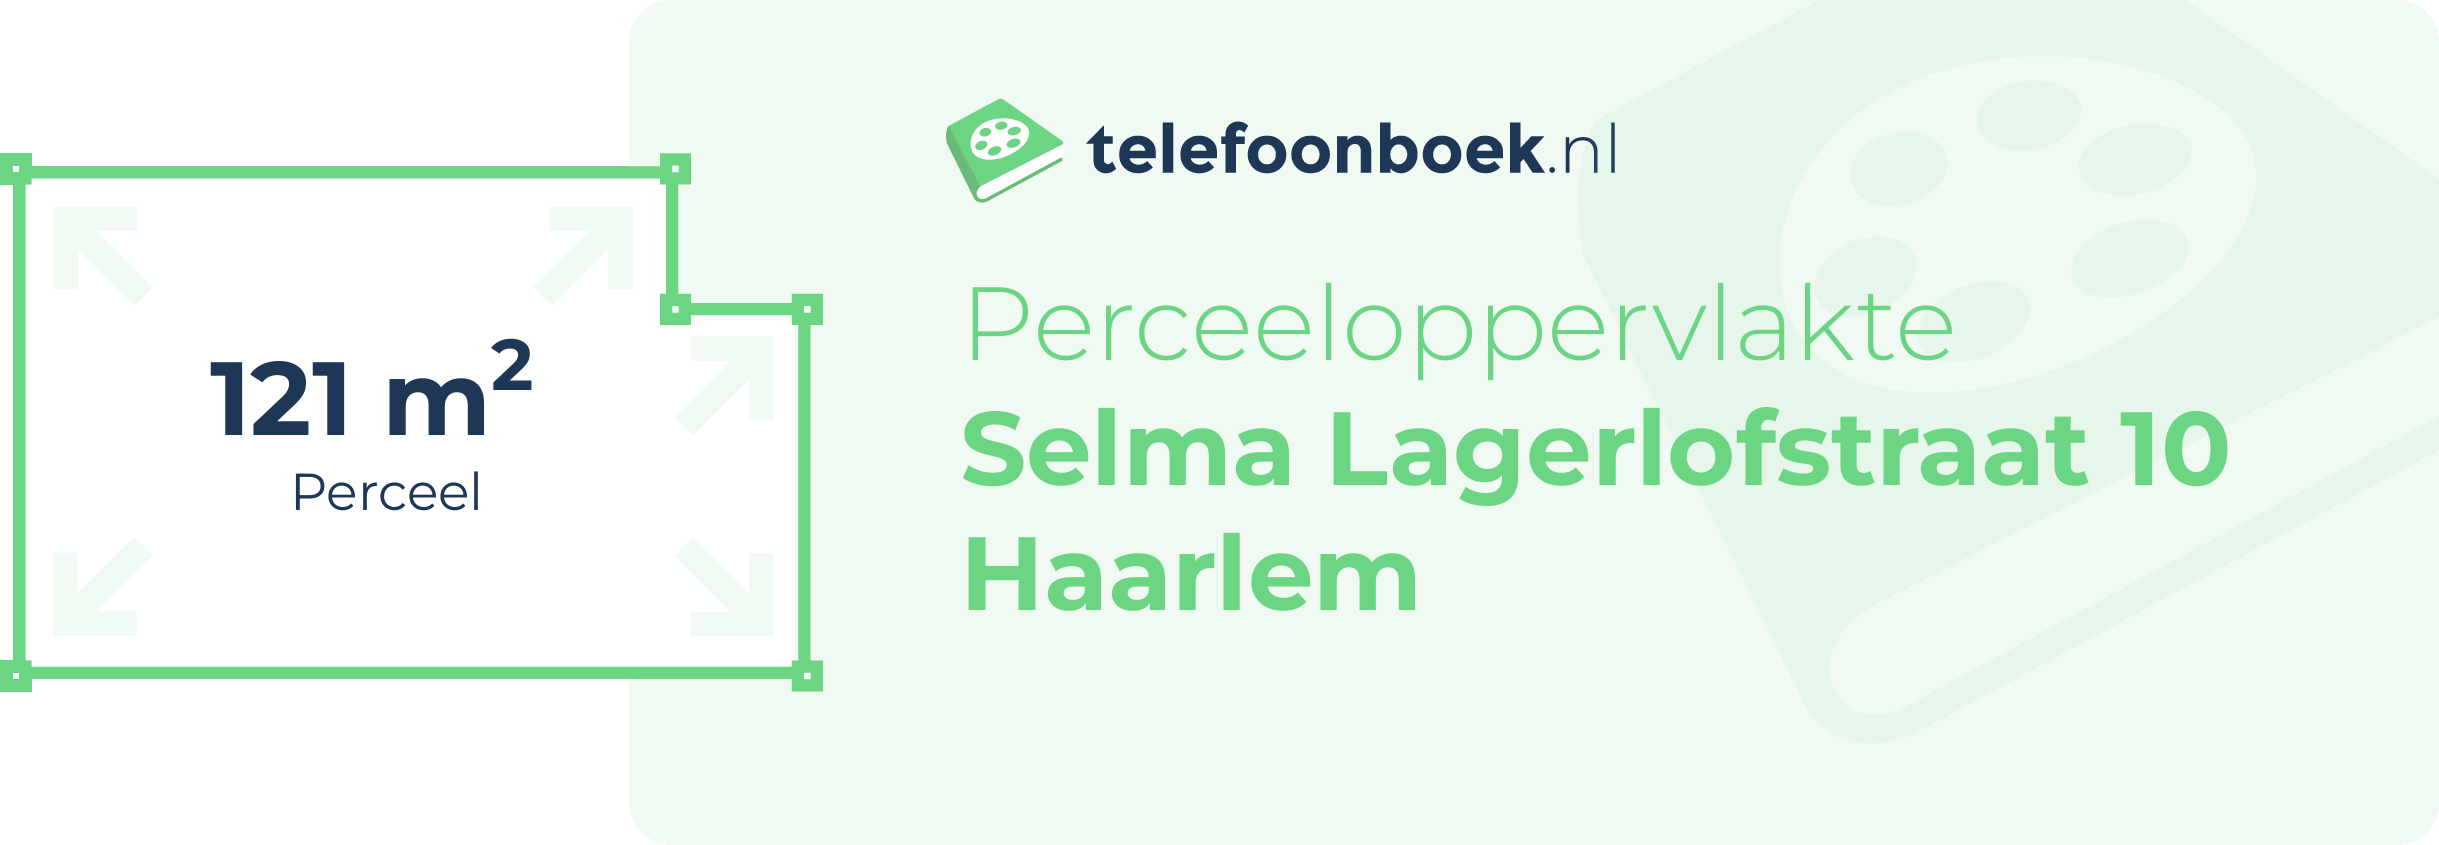 Perceeloppervlakte Selma Lagerlofstraat 10 Haarlem